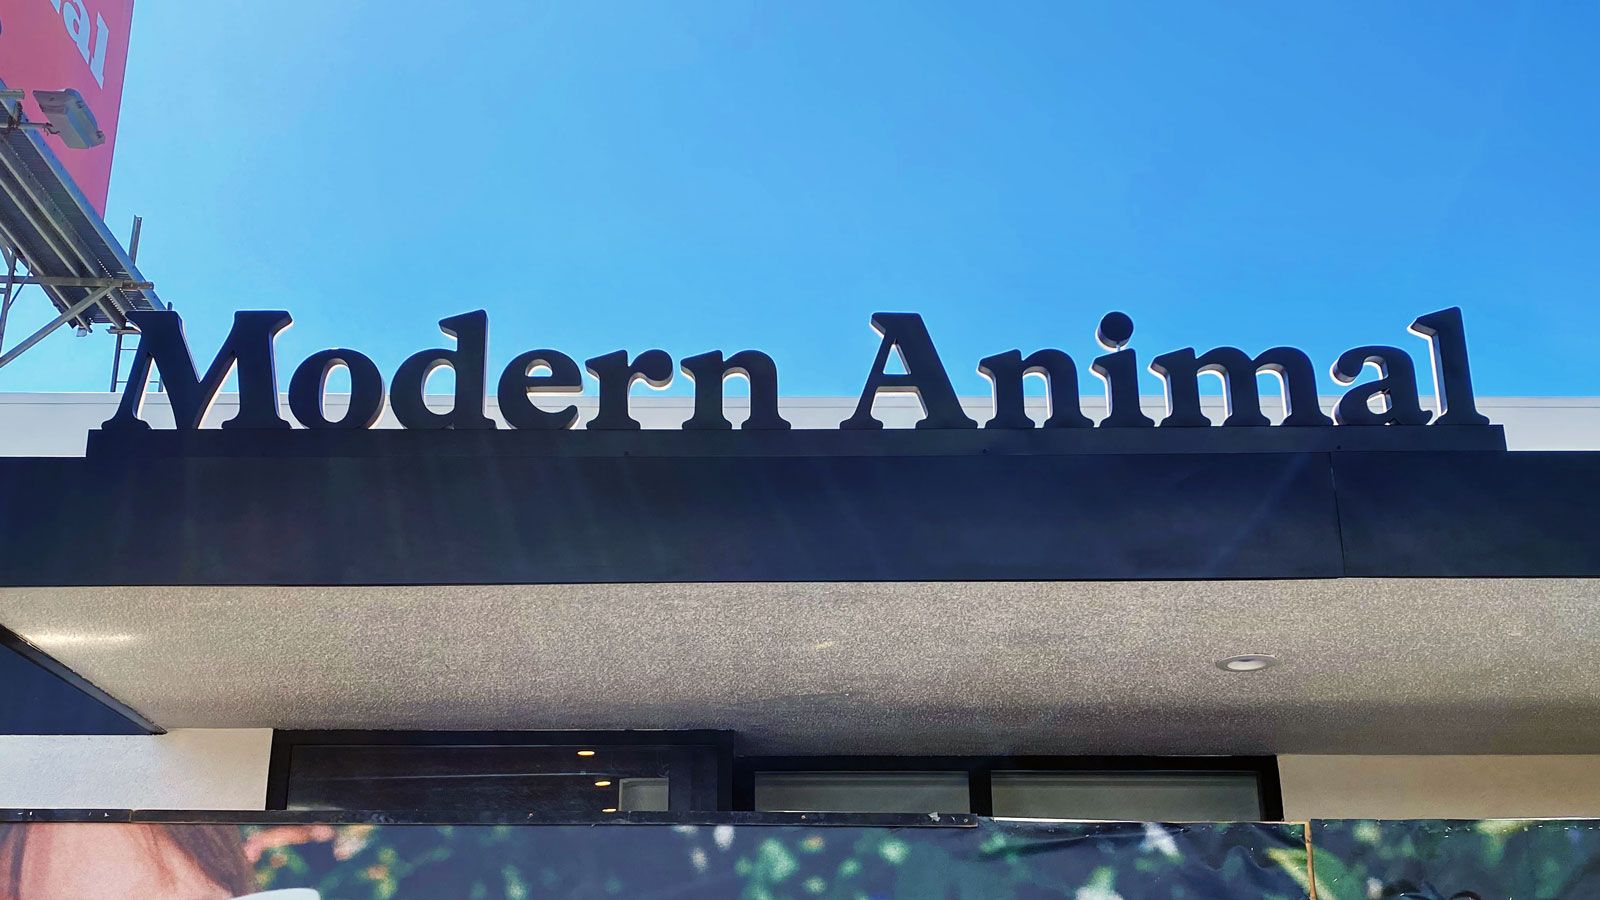 modern animal light up letters